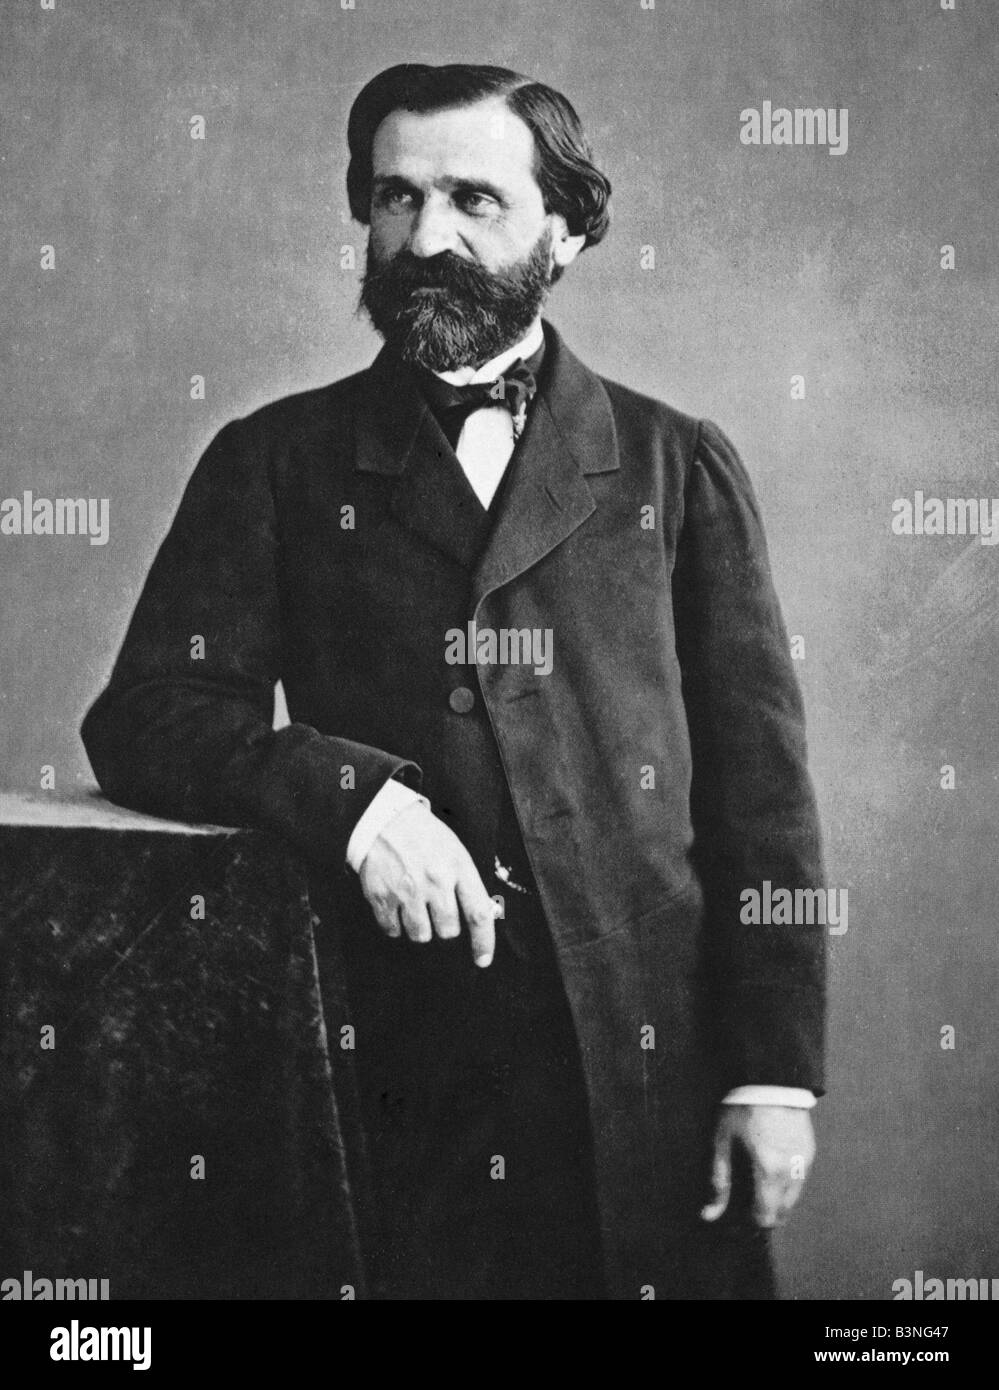 El compositor italiano Giuseppe Verdi de 1813 a 1901 aquí alrededor de 1860 Foto de stock